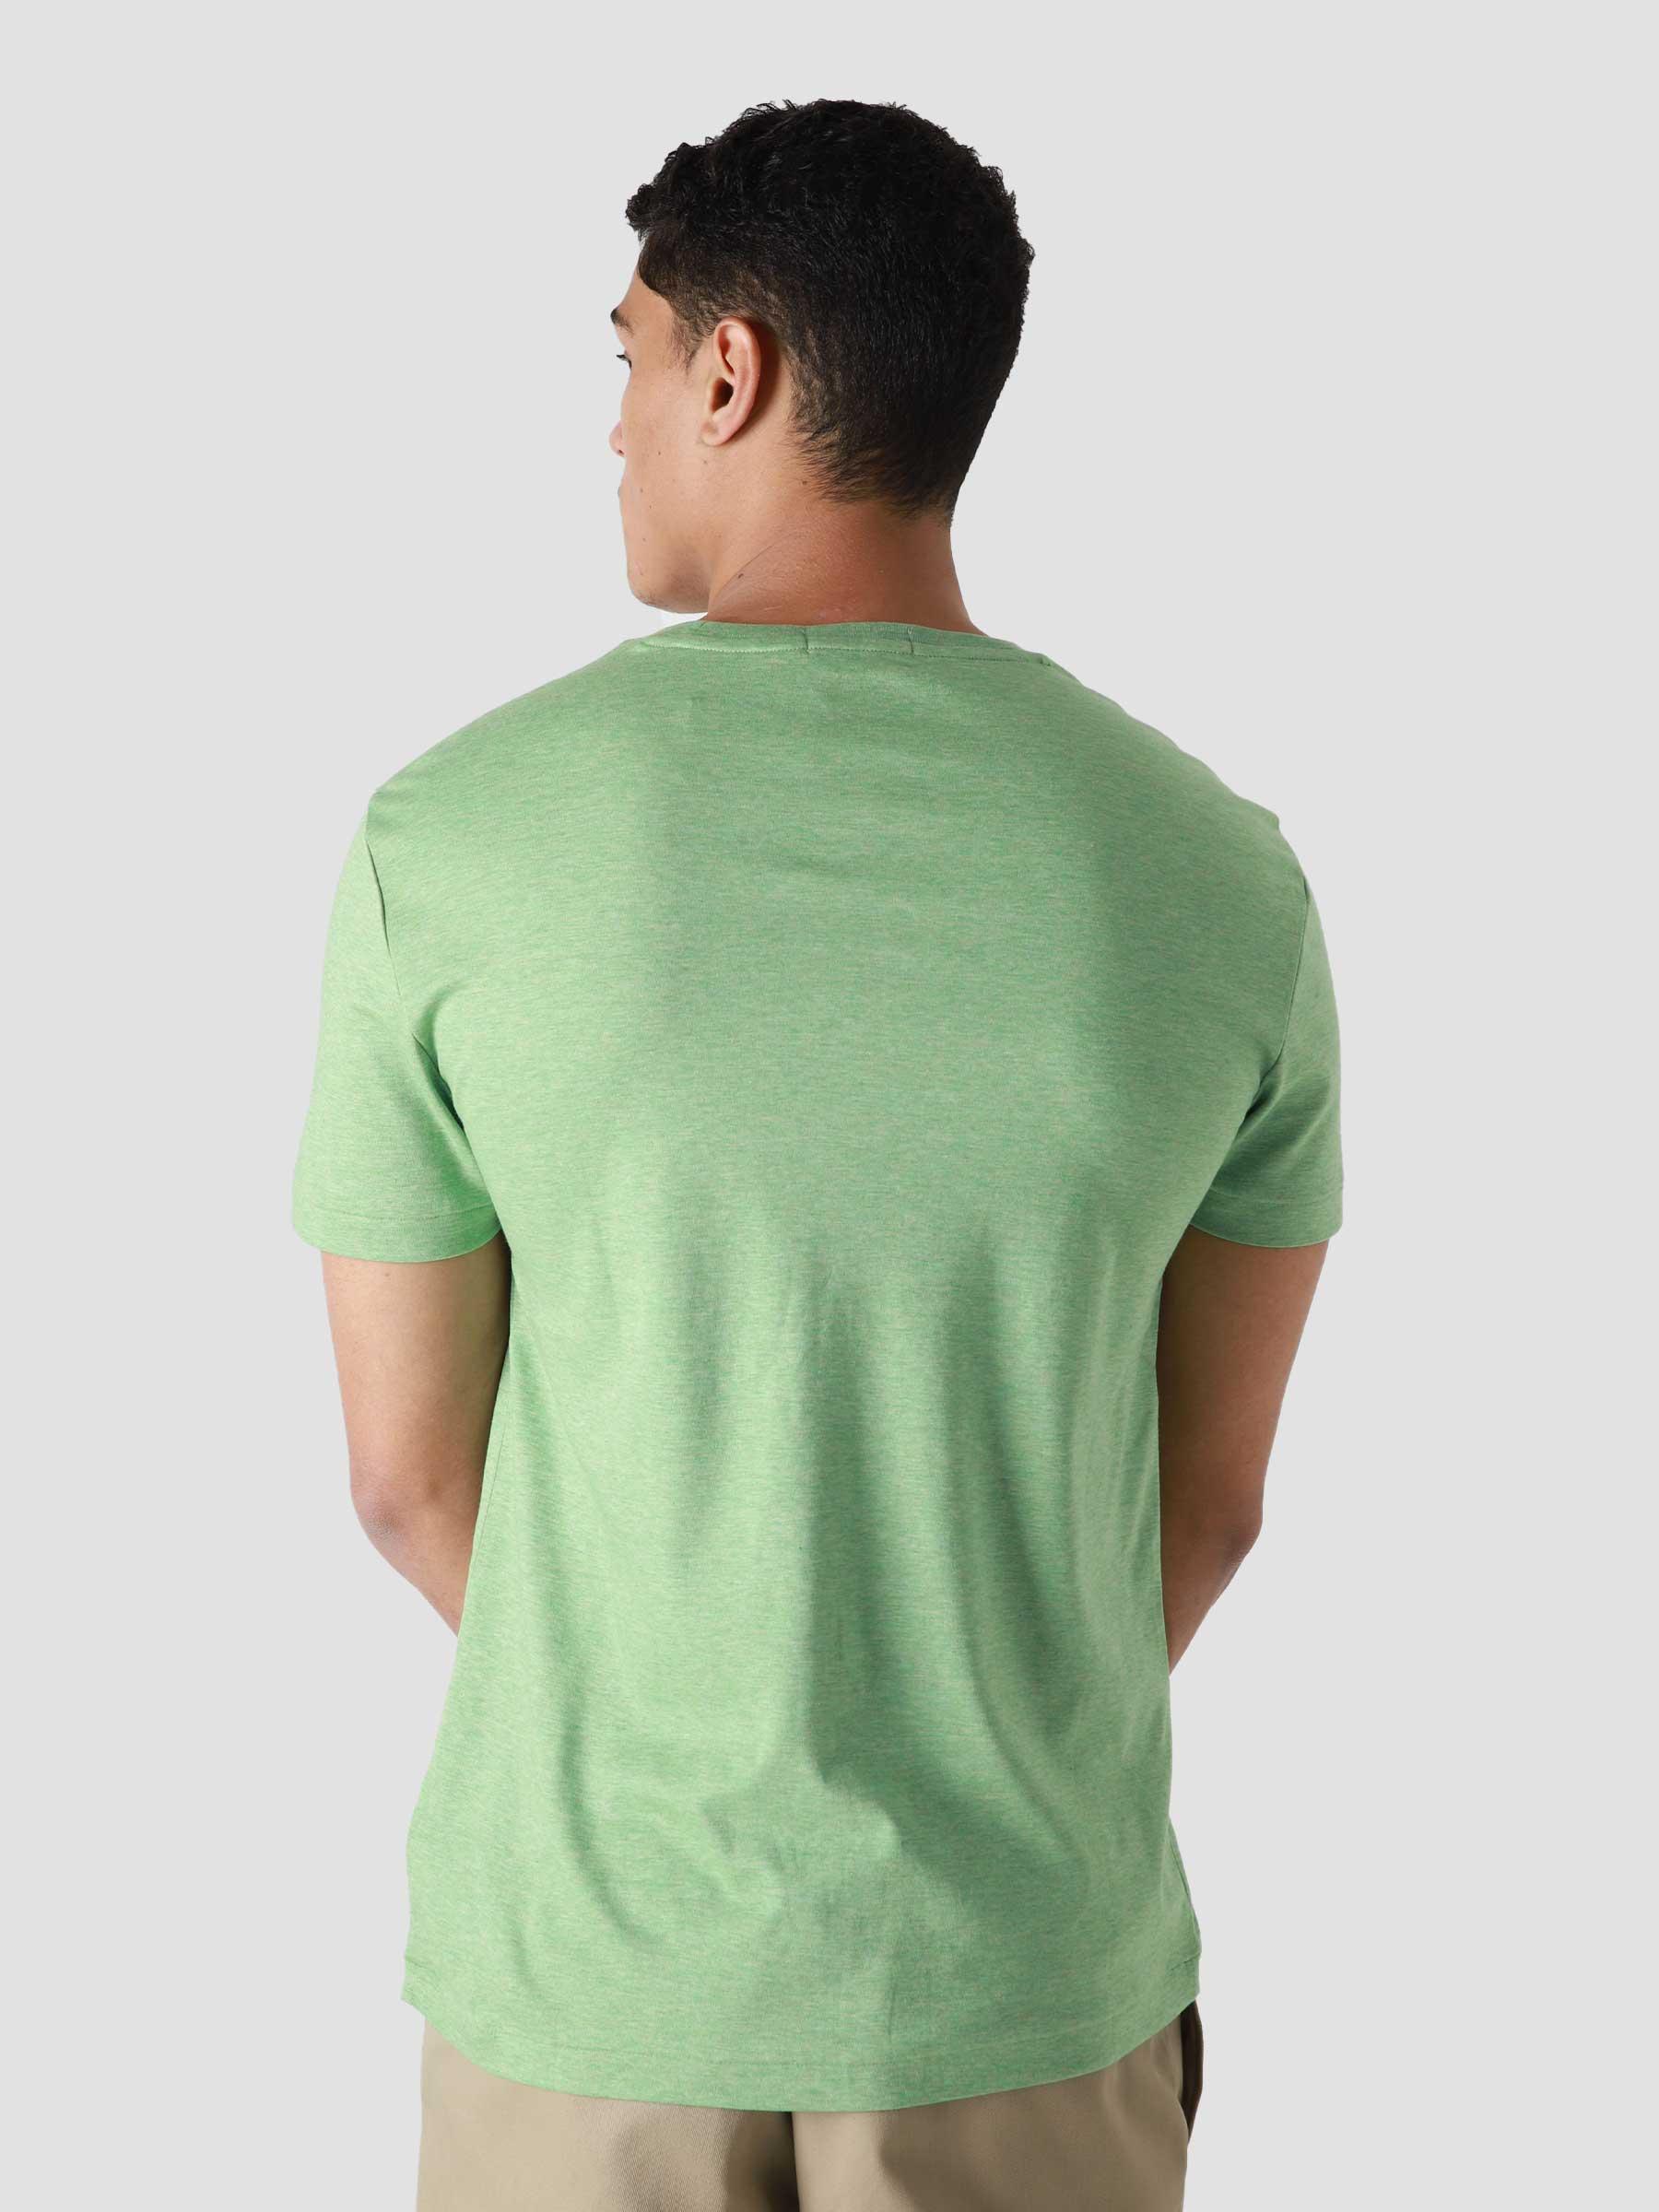 Pima Polo SSL T-Shirt Outback Green Heather 710740727047